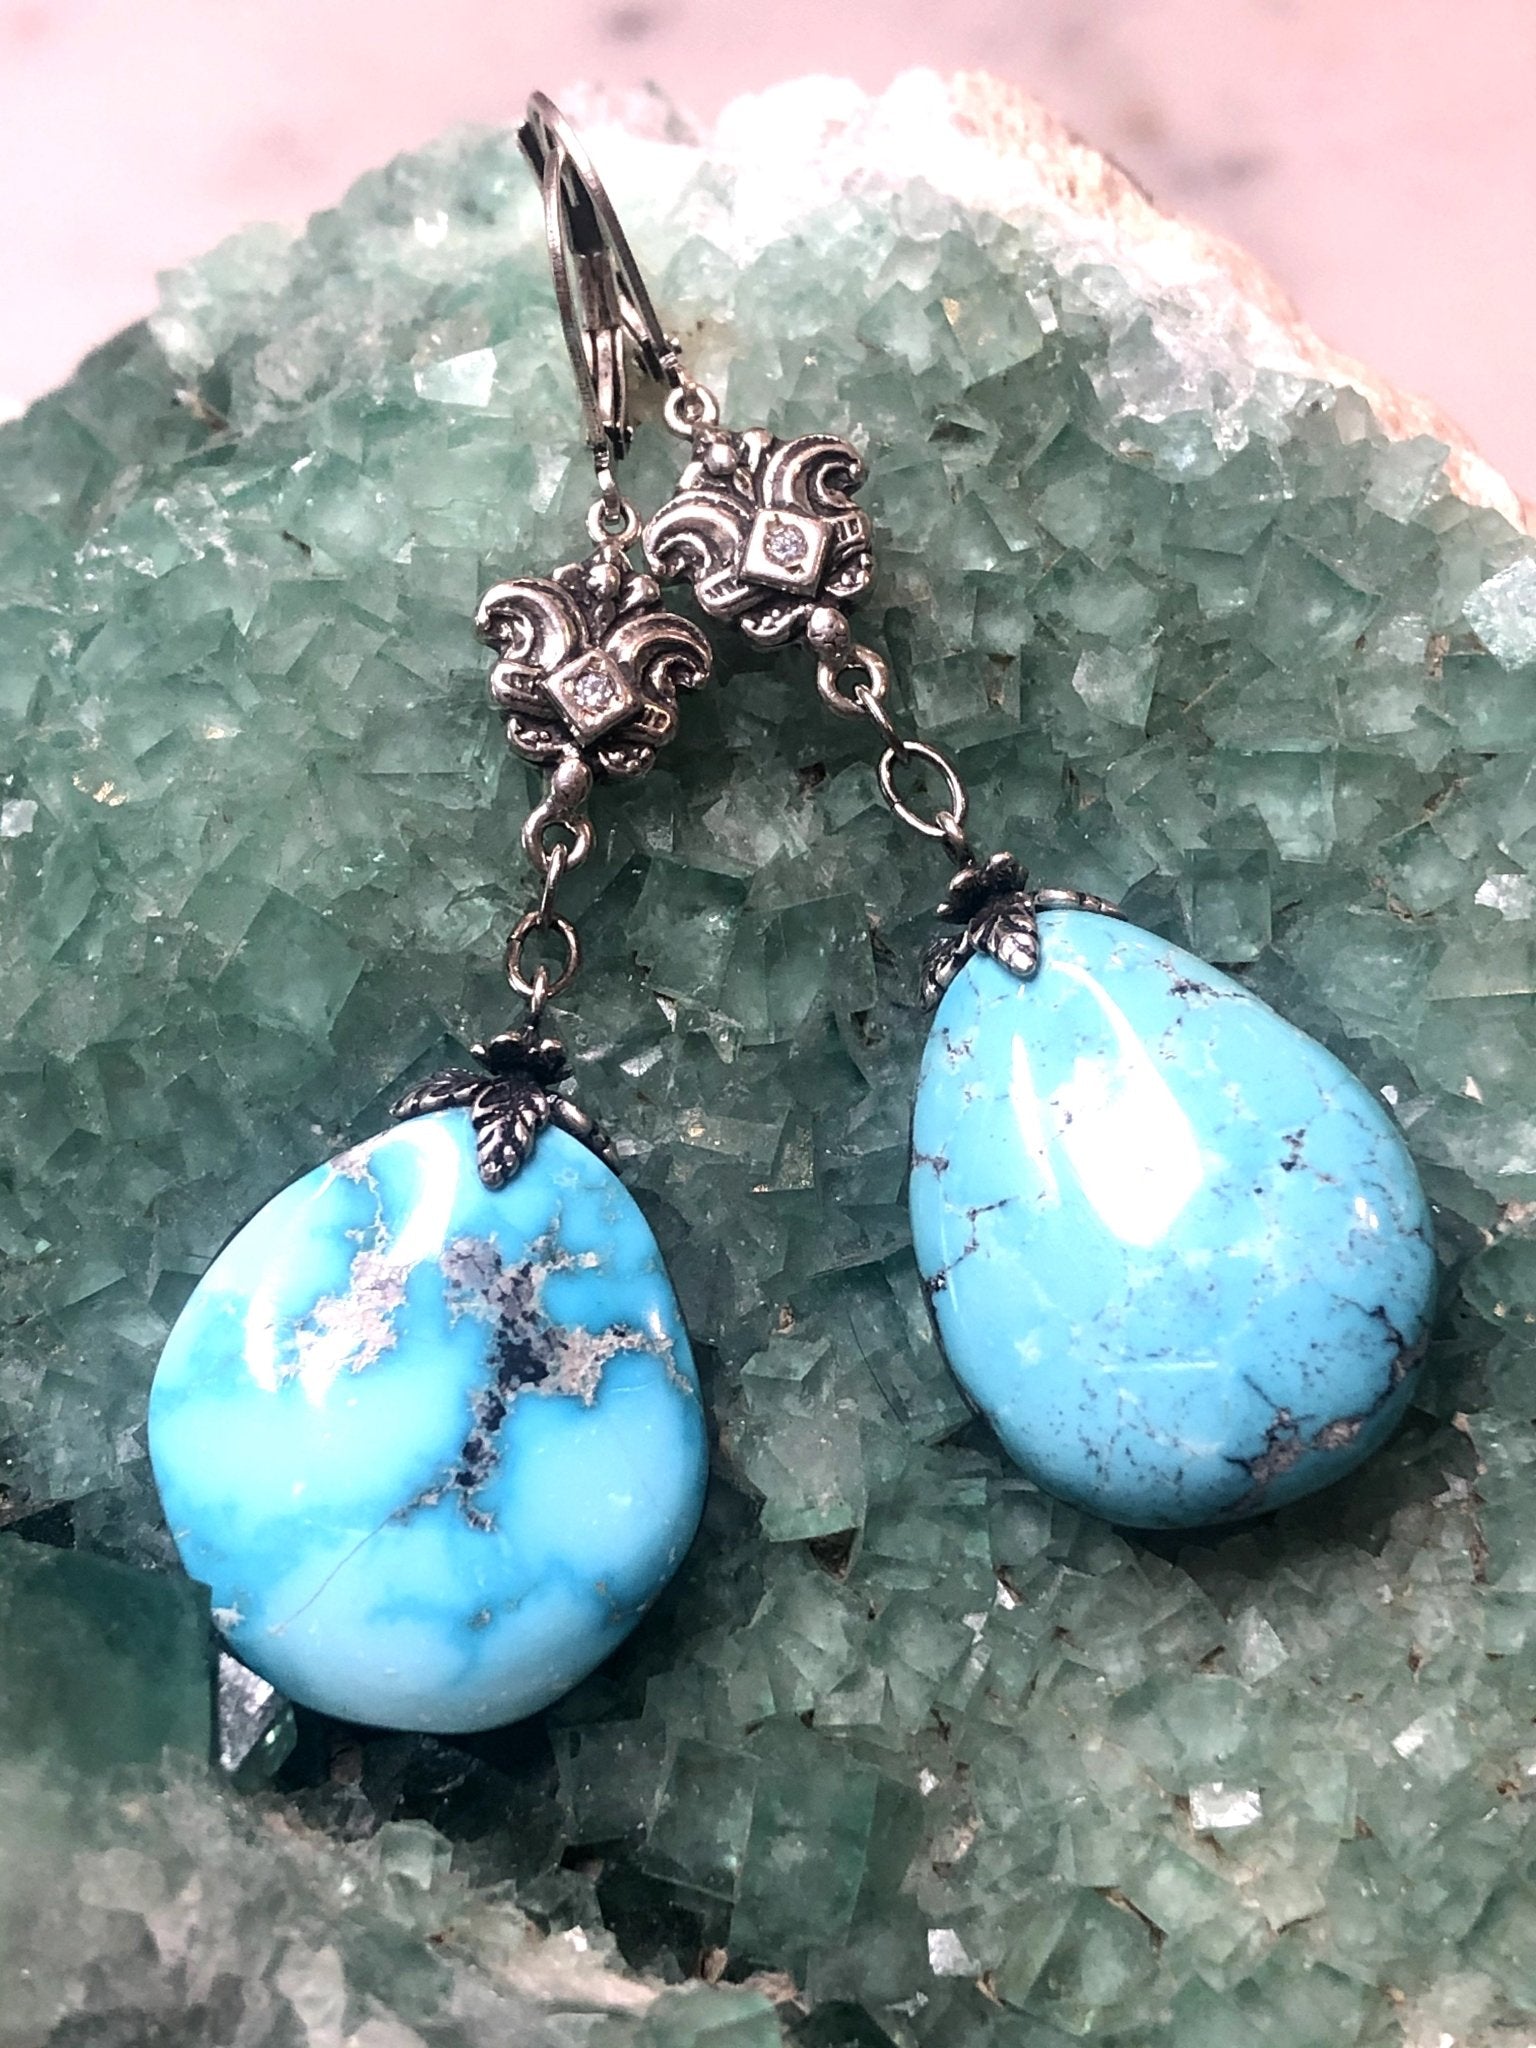 Sleeping Beauty Blue Vintage Arizona Turquoise Drops Earrings with Sterling Silver Rock Crystal Fleur de Lis Leverbacks by Sage Machado - The Sage Lifestyle